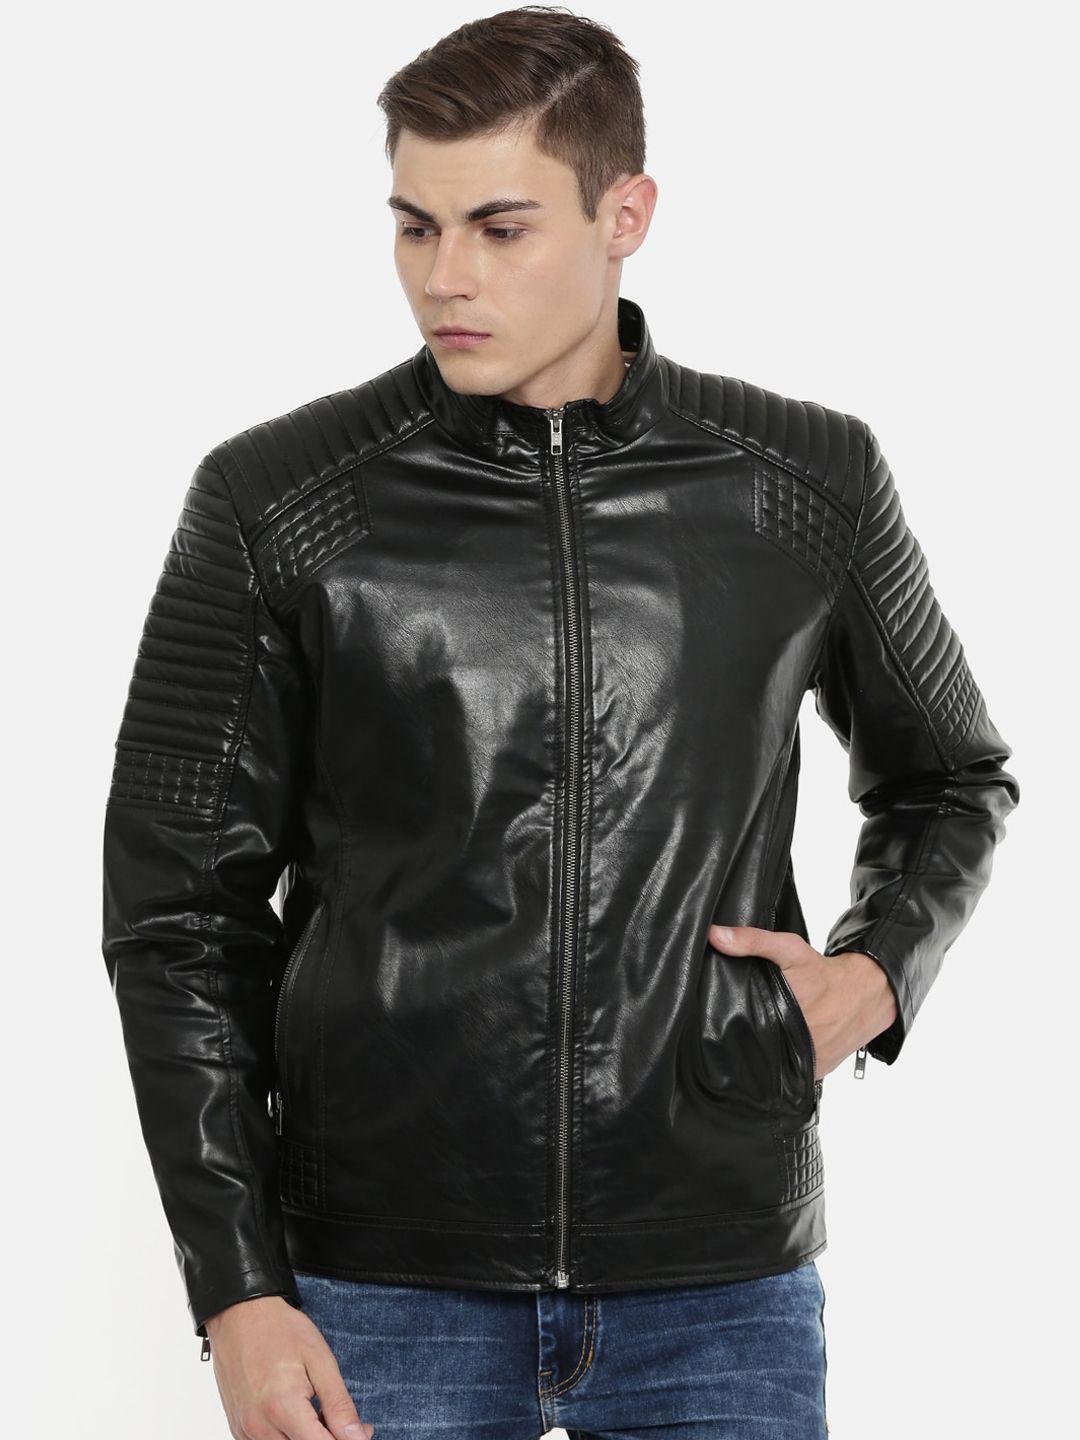 monochrome-men-black-leather-insulator-biker-jacket